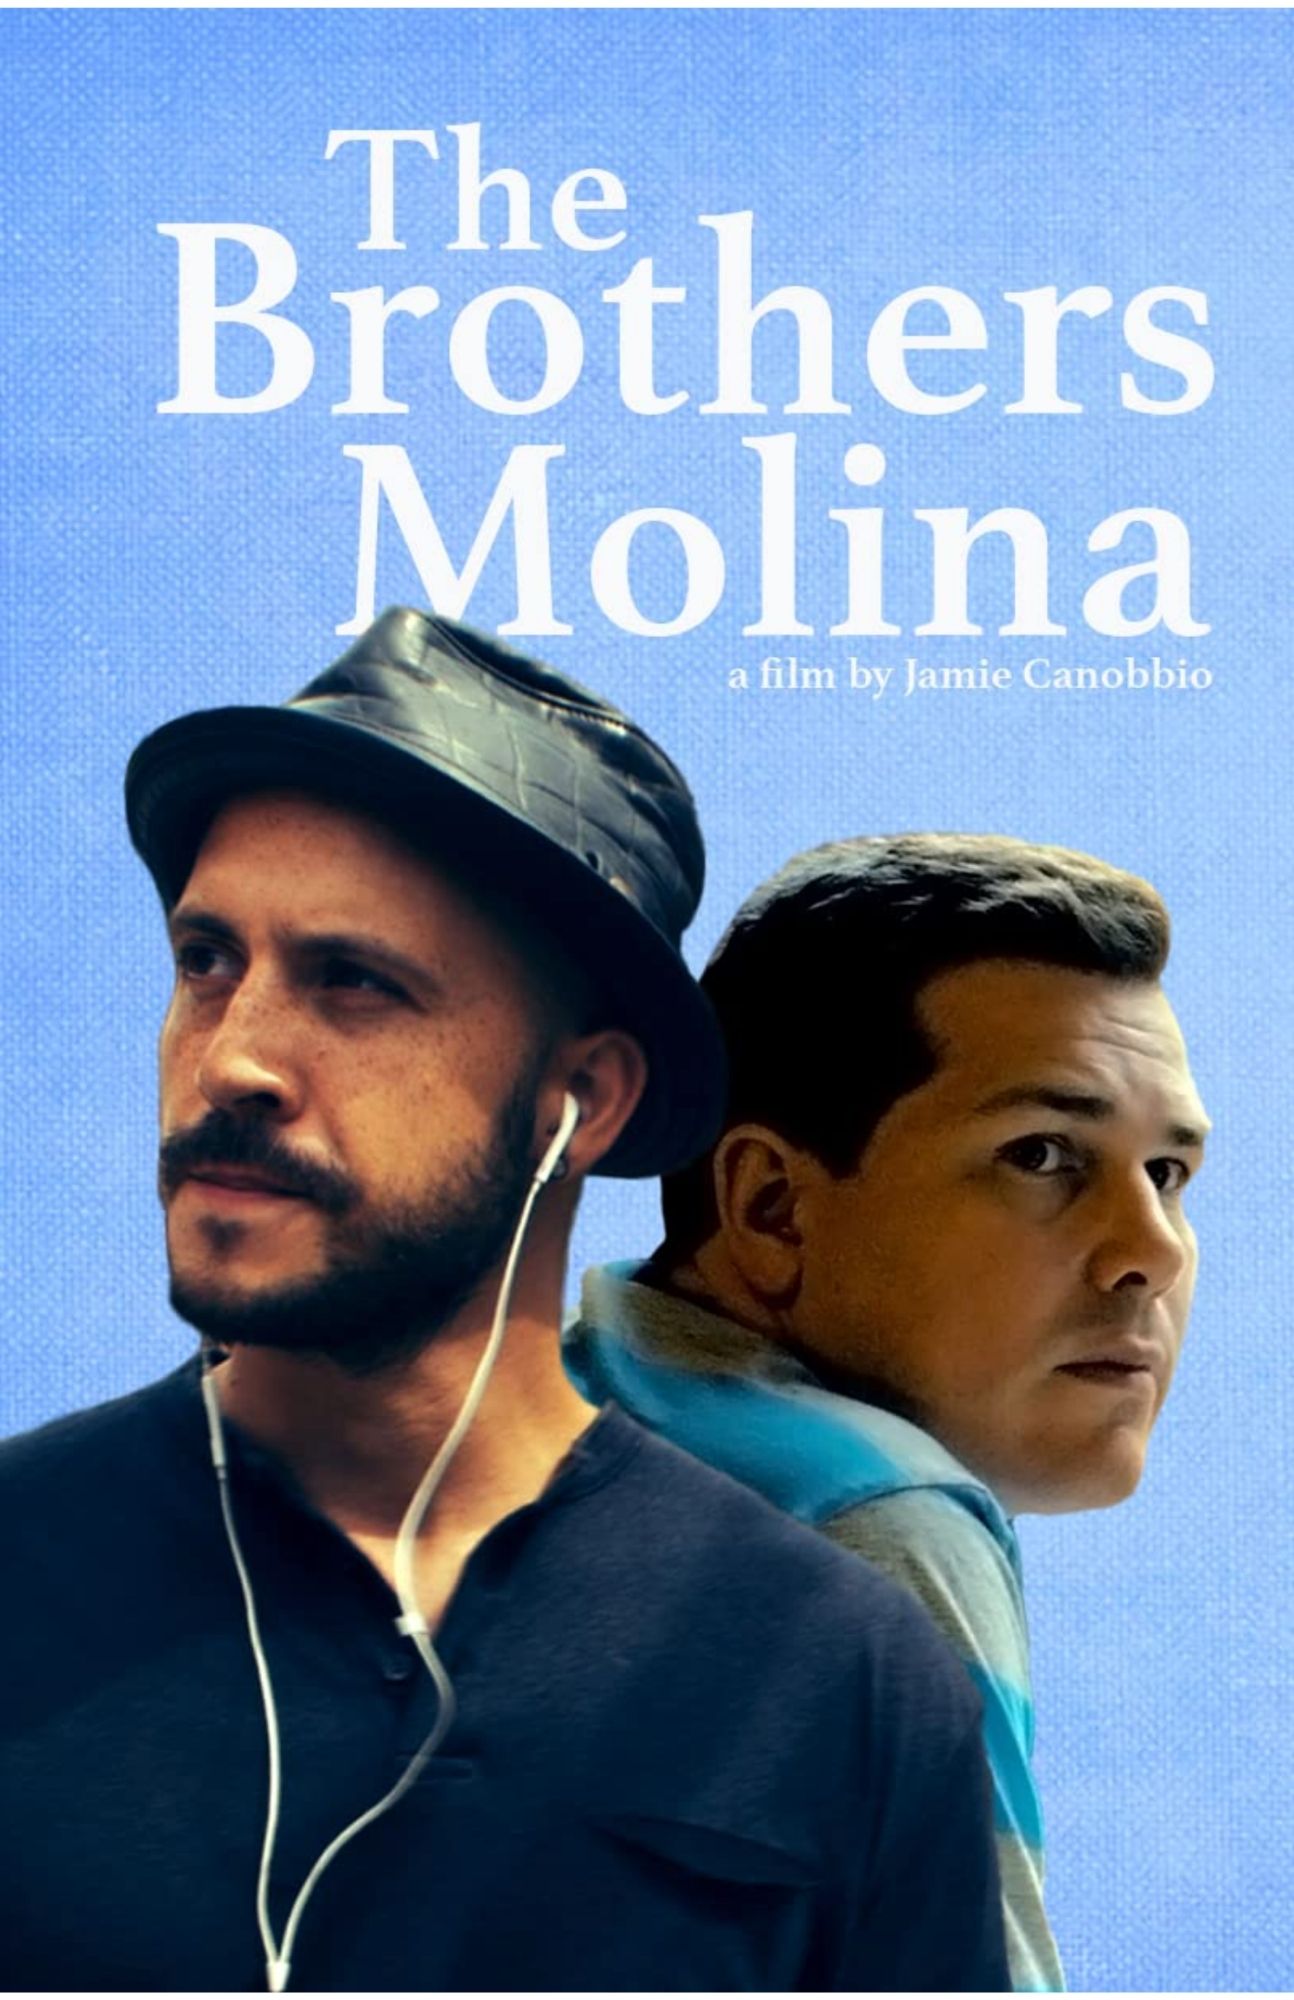 THE BROTHERS MOLINA, Jamie Cannobio, writer, director, producer